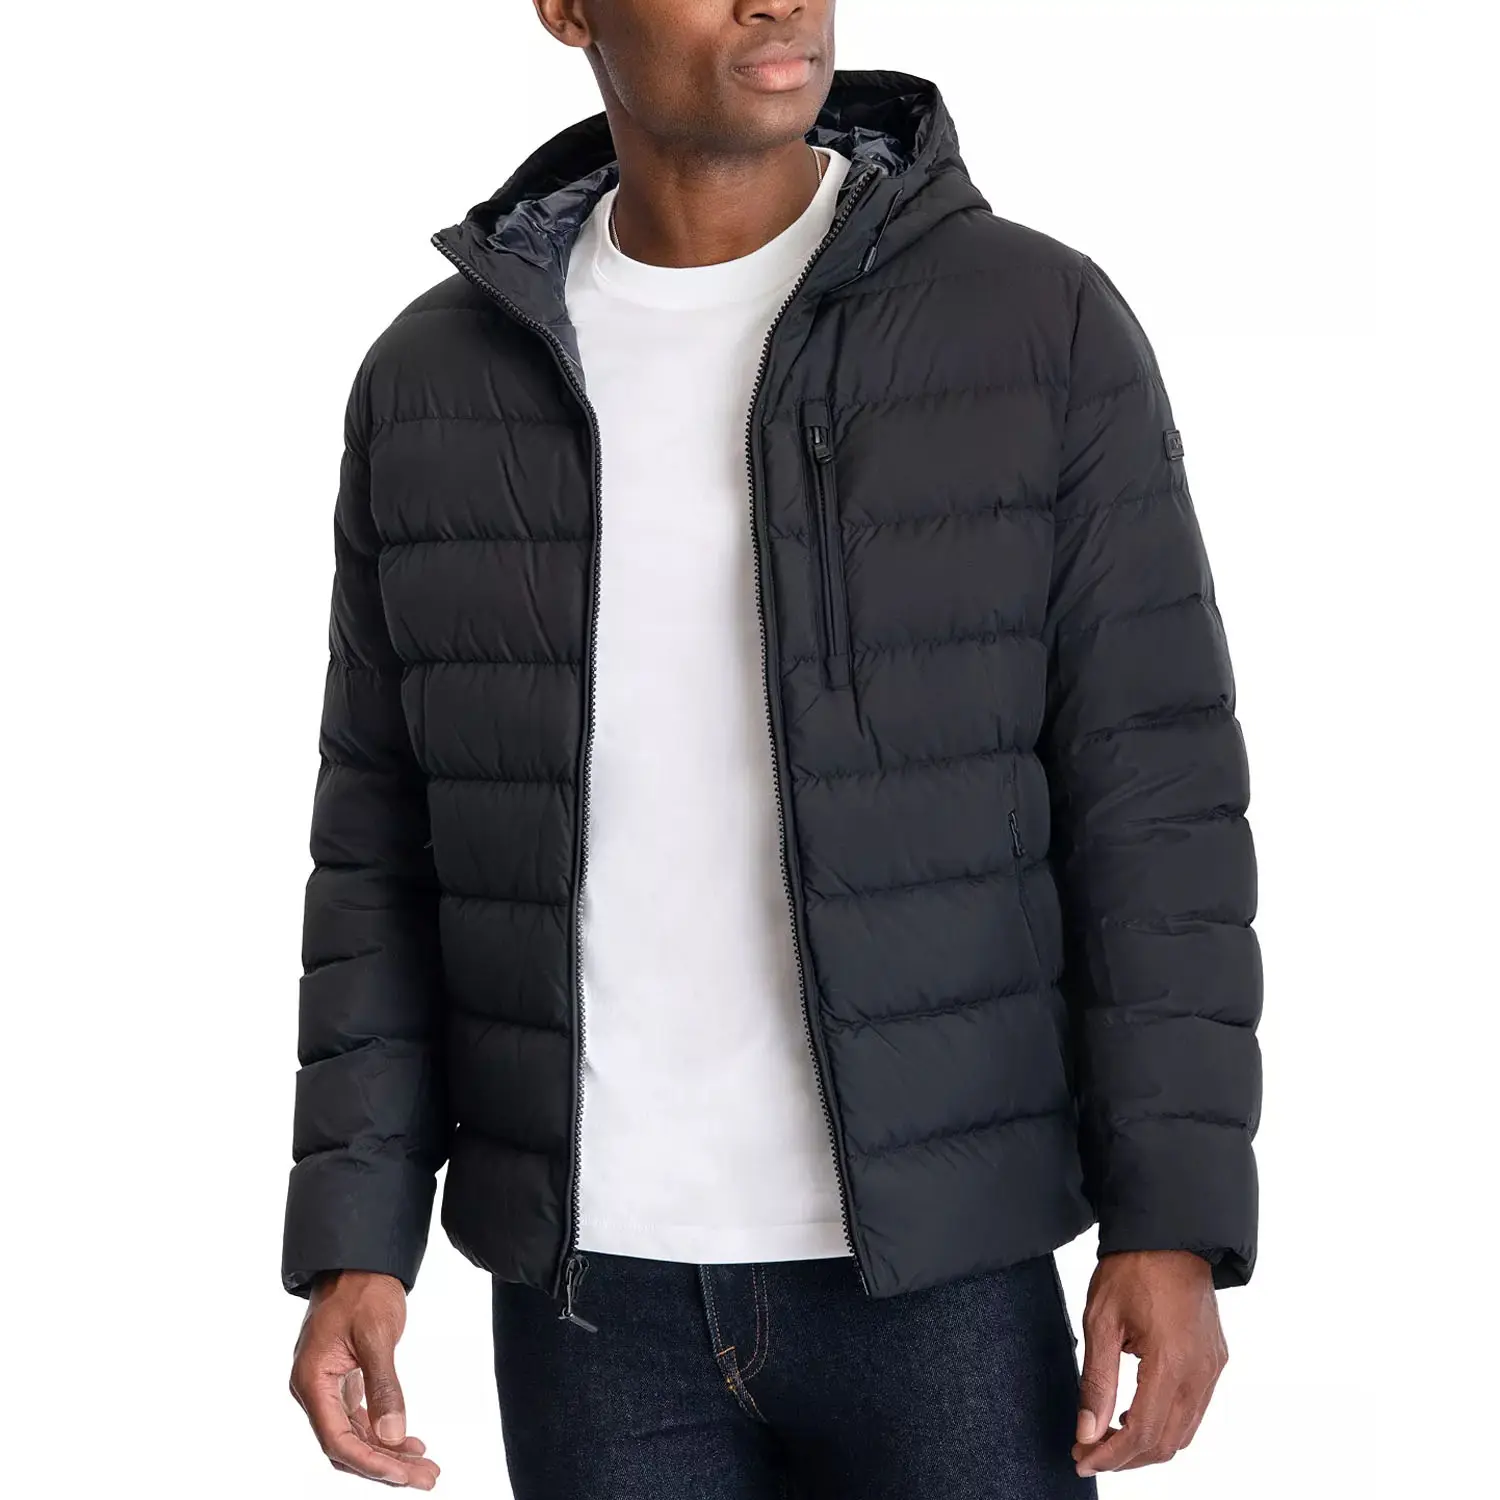 Jaqueta de inverno acolchoada bolha acolchoada para homens jaqueta de nylon preto personalizada para o ar livre